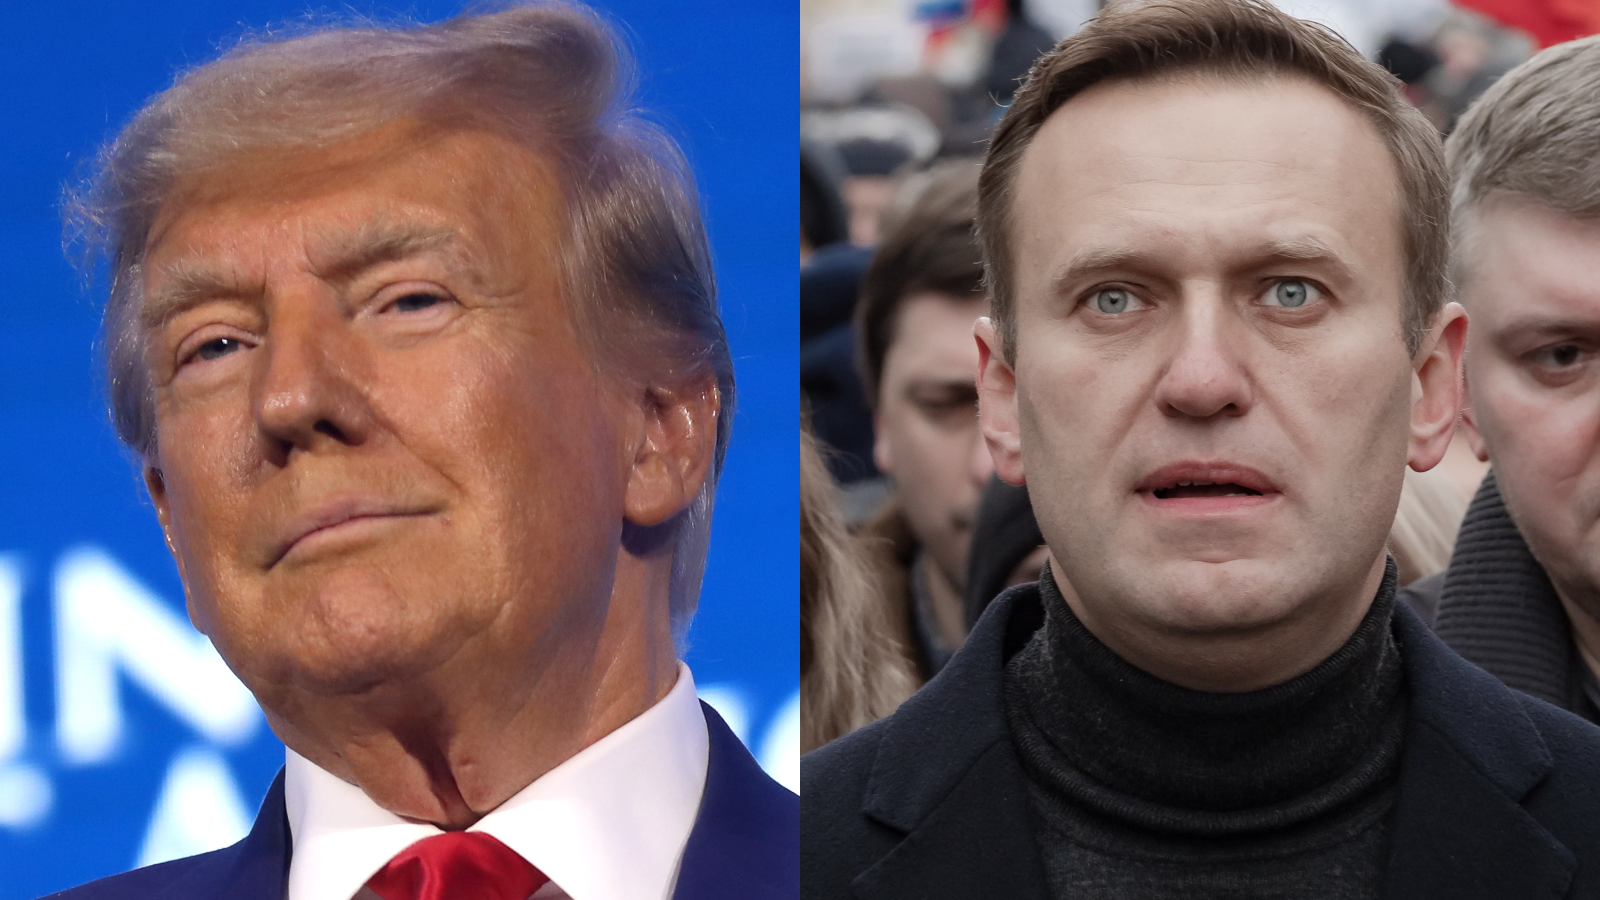 Trump Compares Himself to Navalny